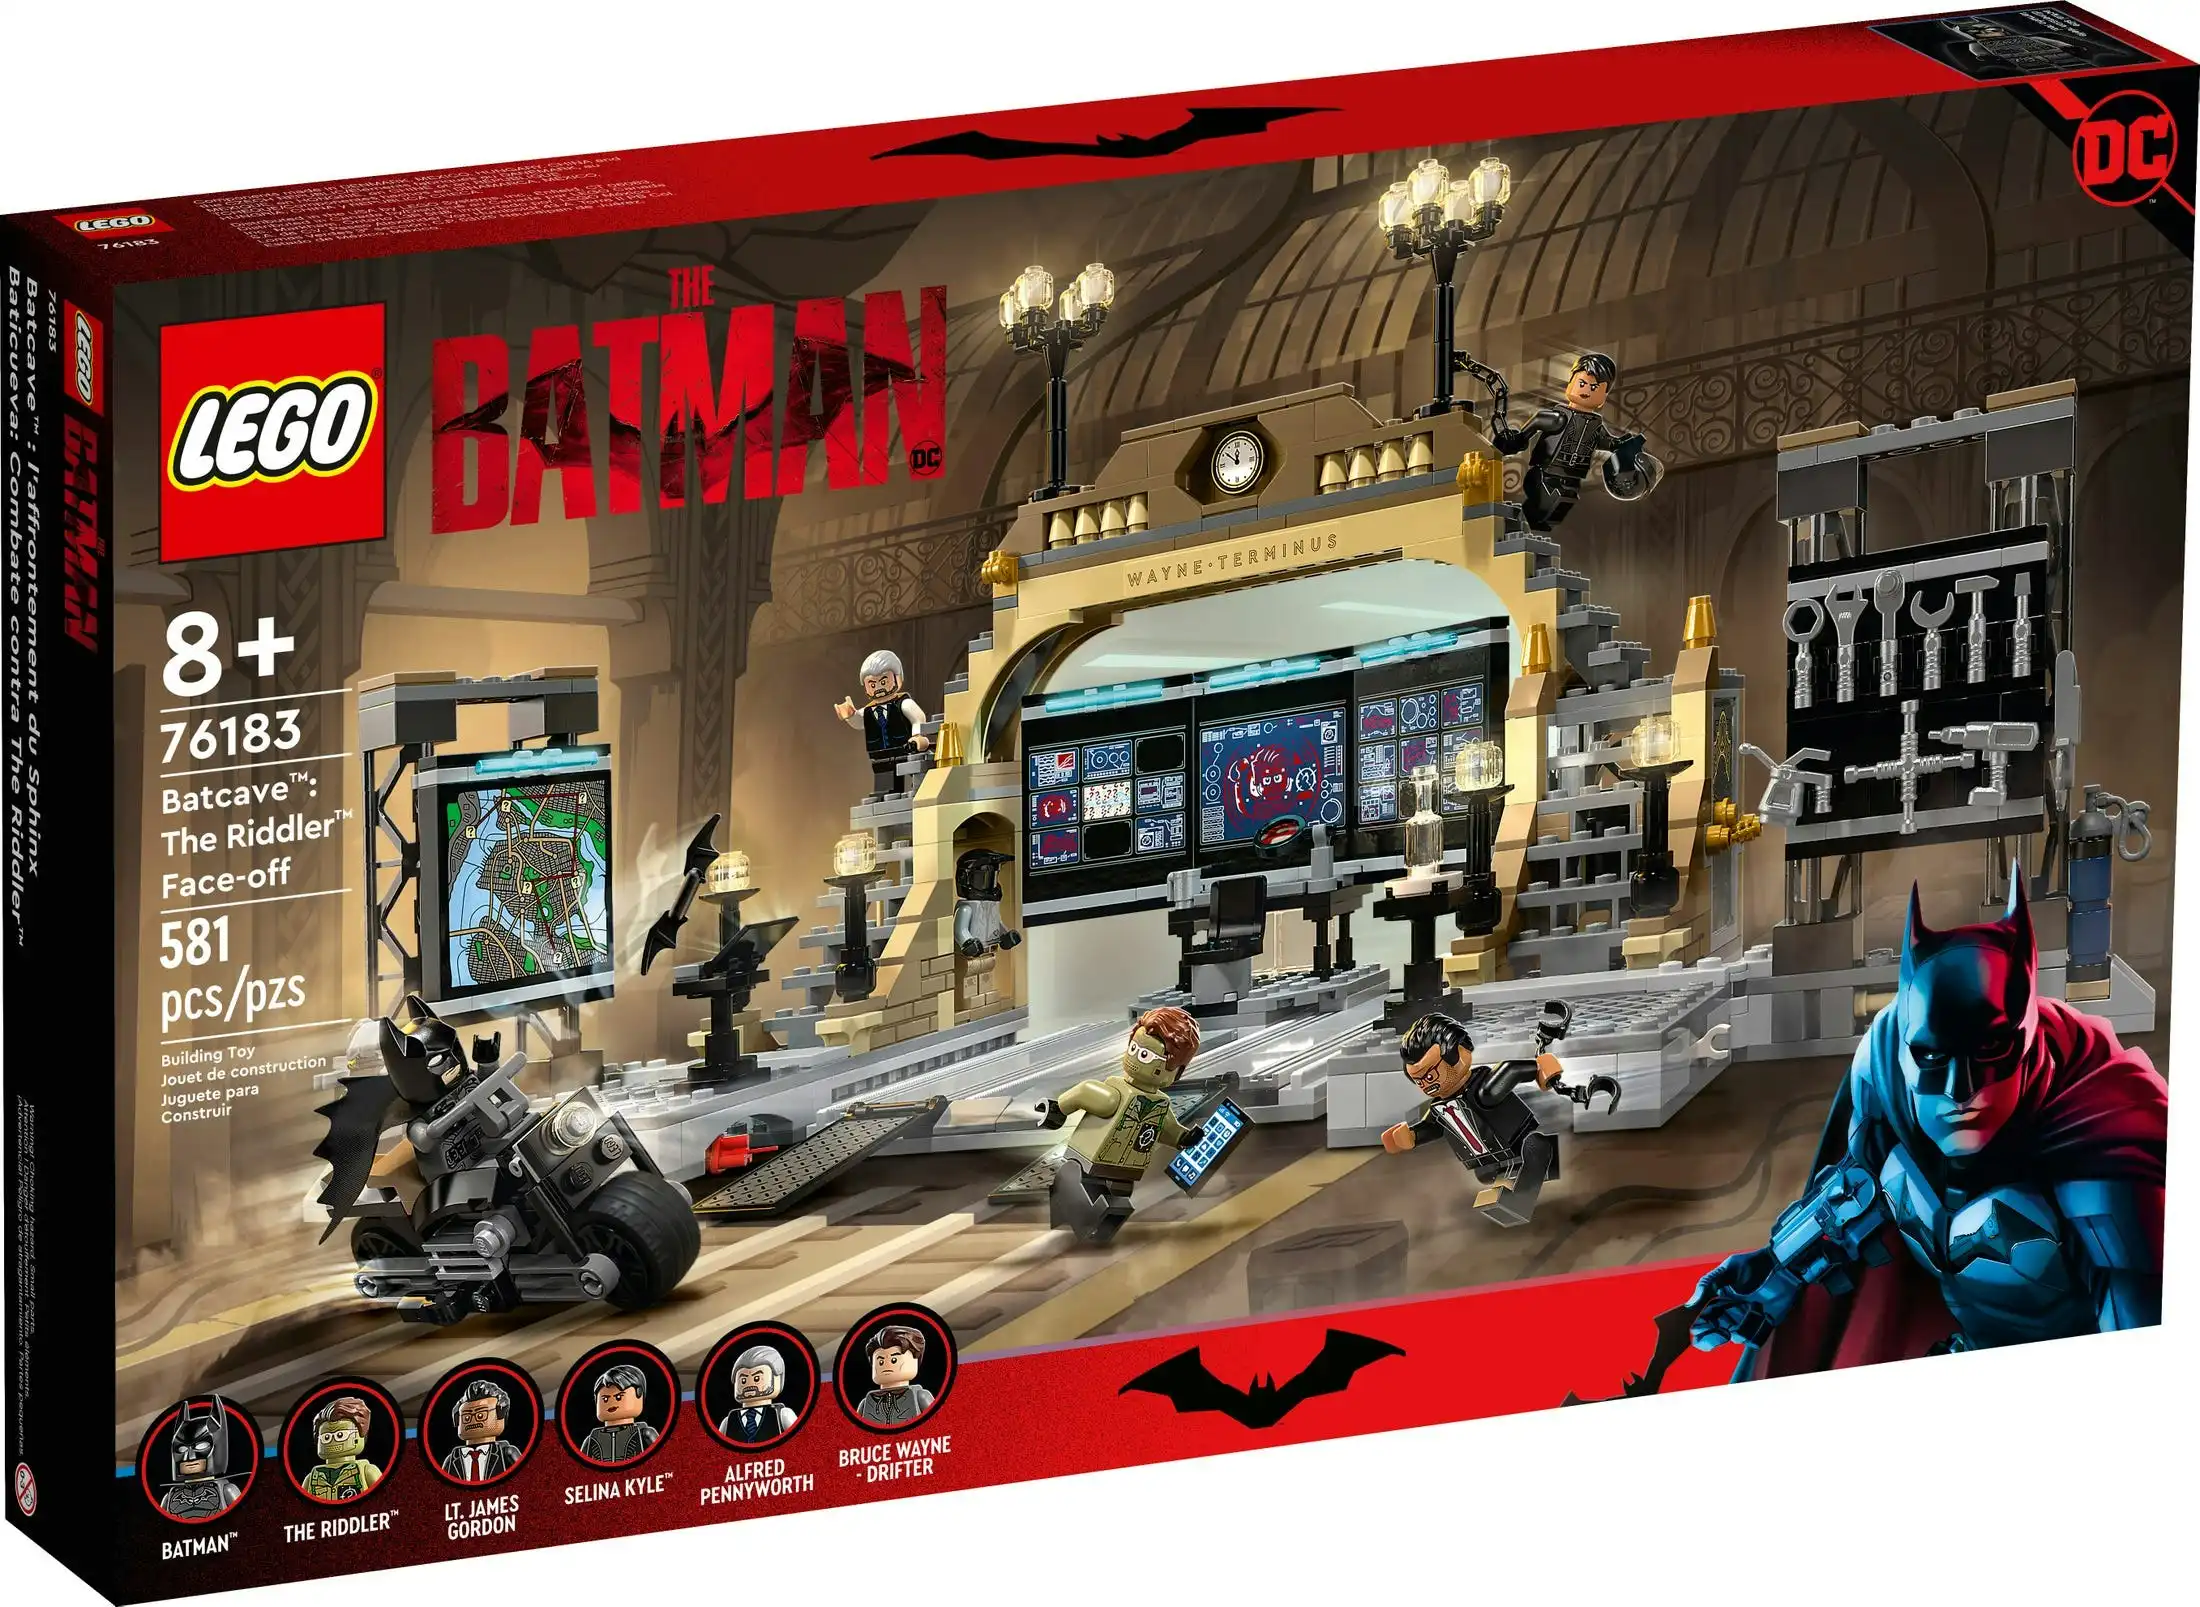 LEGO 76183 Batcave The Riddler Face-off - DC Batman Super Heroes